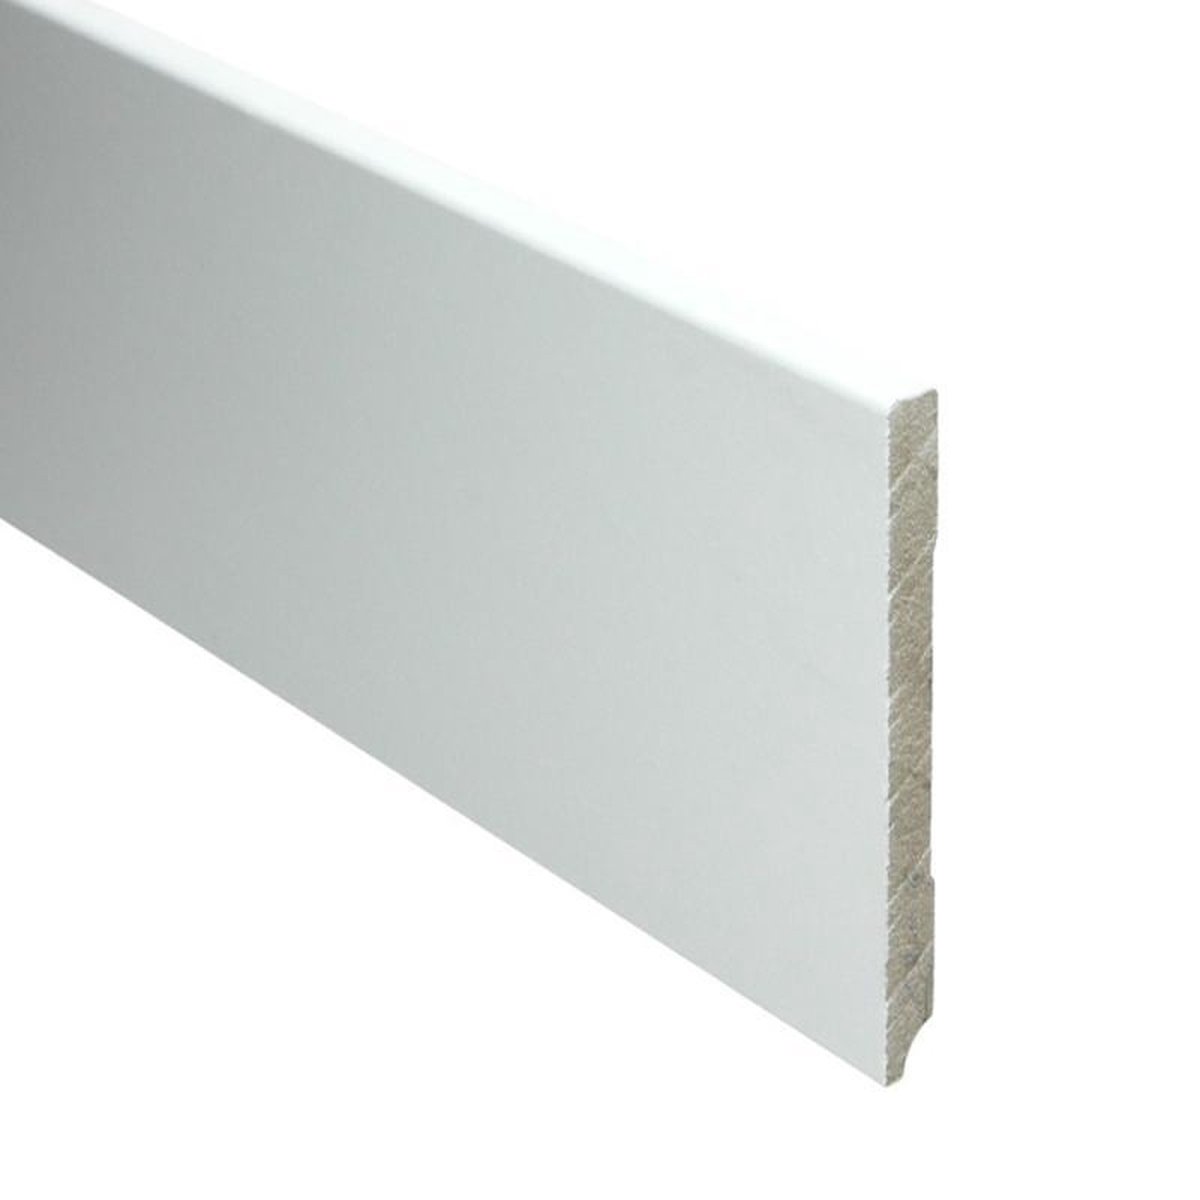 Hoge plinten - MDF - Moderne plint 150x12 mm - Wit - Voorgelakt - RAL 9016 - Per 5 stuks 2,4m